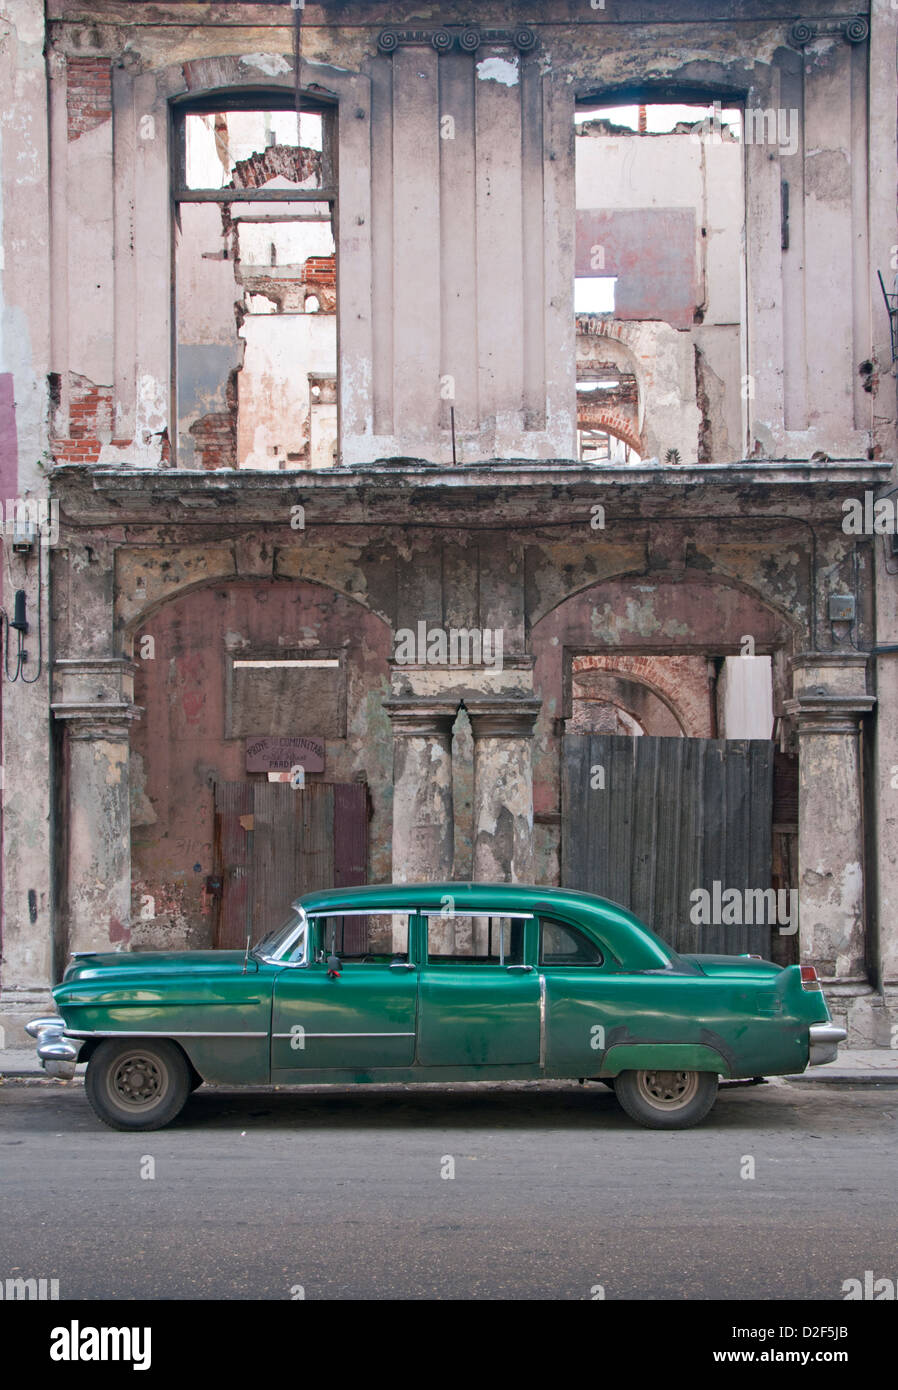 Old American 1950s Classic Car in front of Dilapidated Buildings, Paseo del Prado, Centro Habana, Havana, Cuba Stock Photo